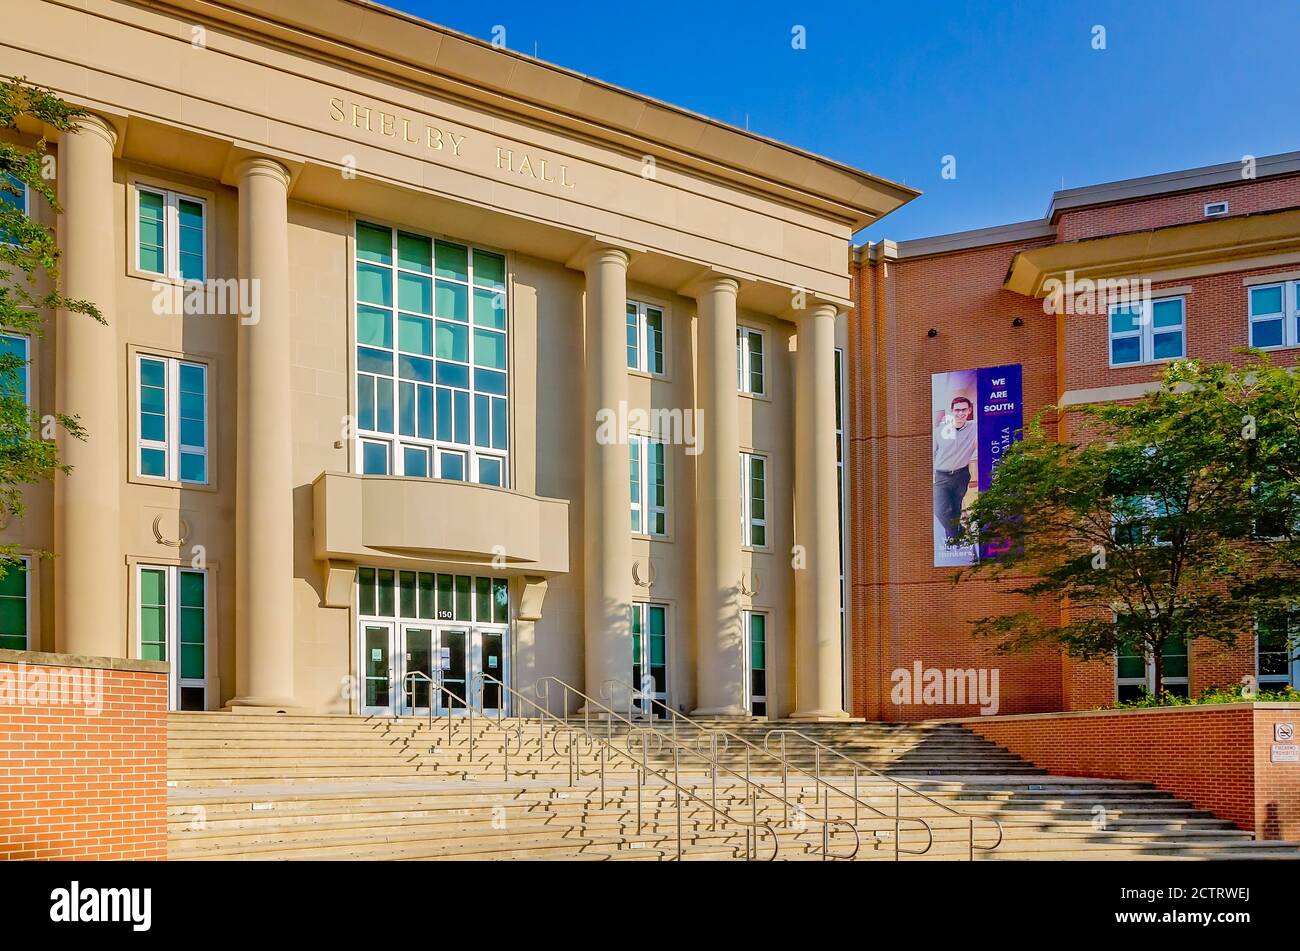 Shelby Hall, wo sich das College of Engineering befindet, ist an der University of South Alabama am 22. August 2020 in Mobile, Alabama abgebildet. Stockfoto